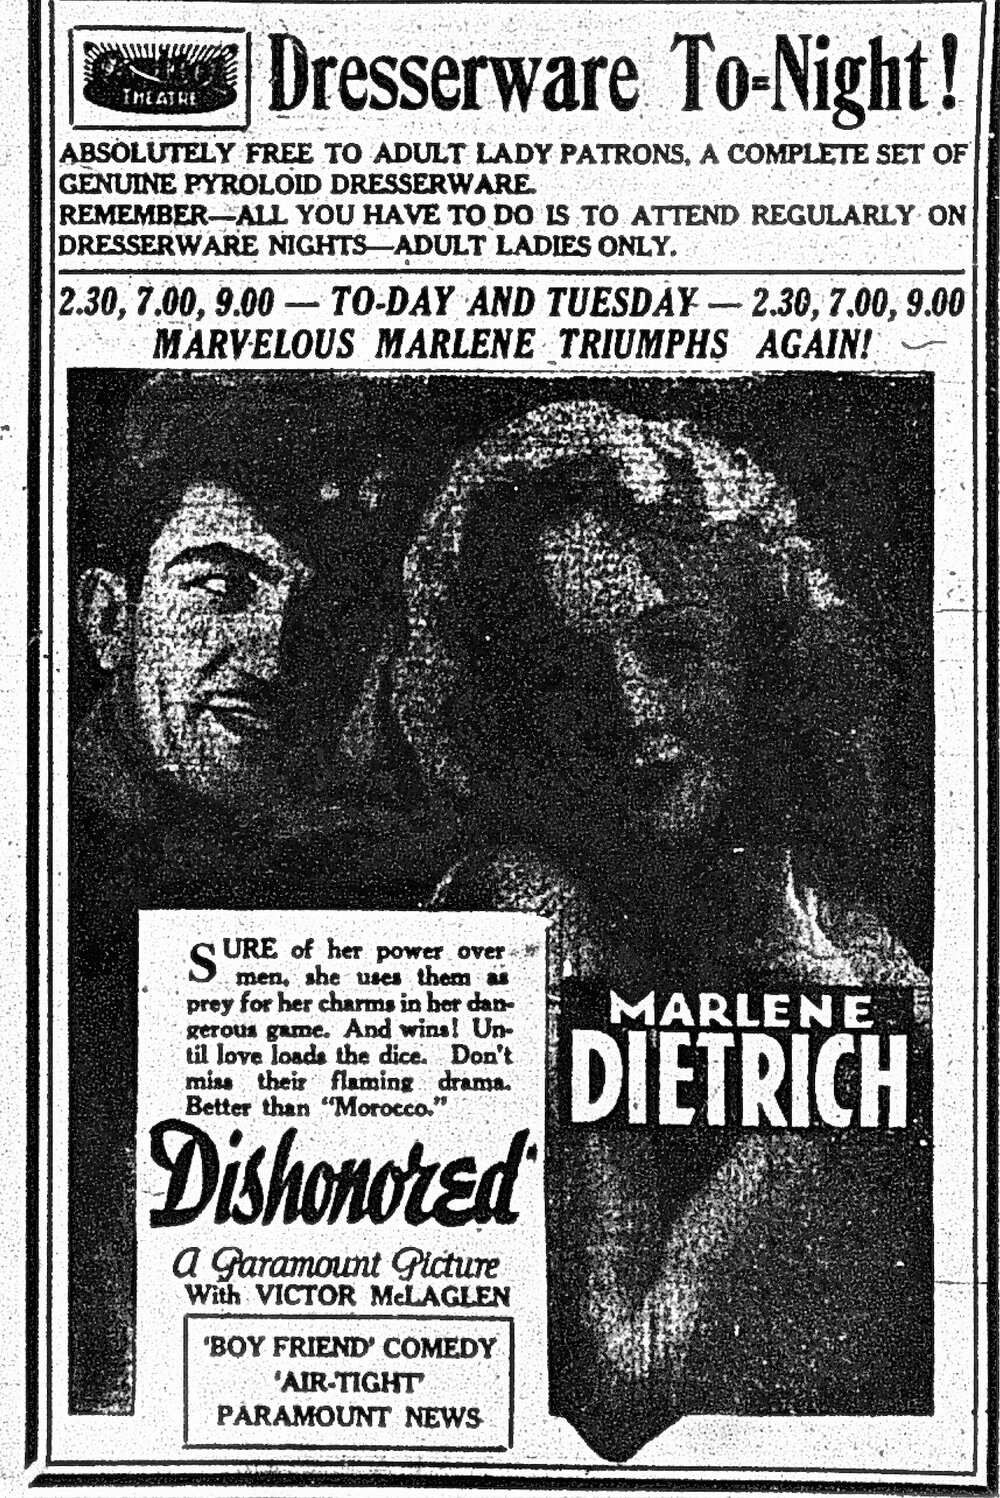 1931 May 11 p13 Capitol Dietrich dresserwar (2).JPG